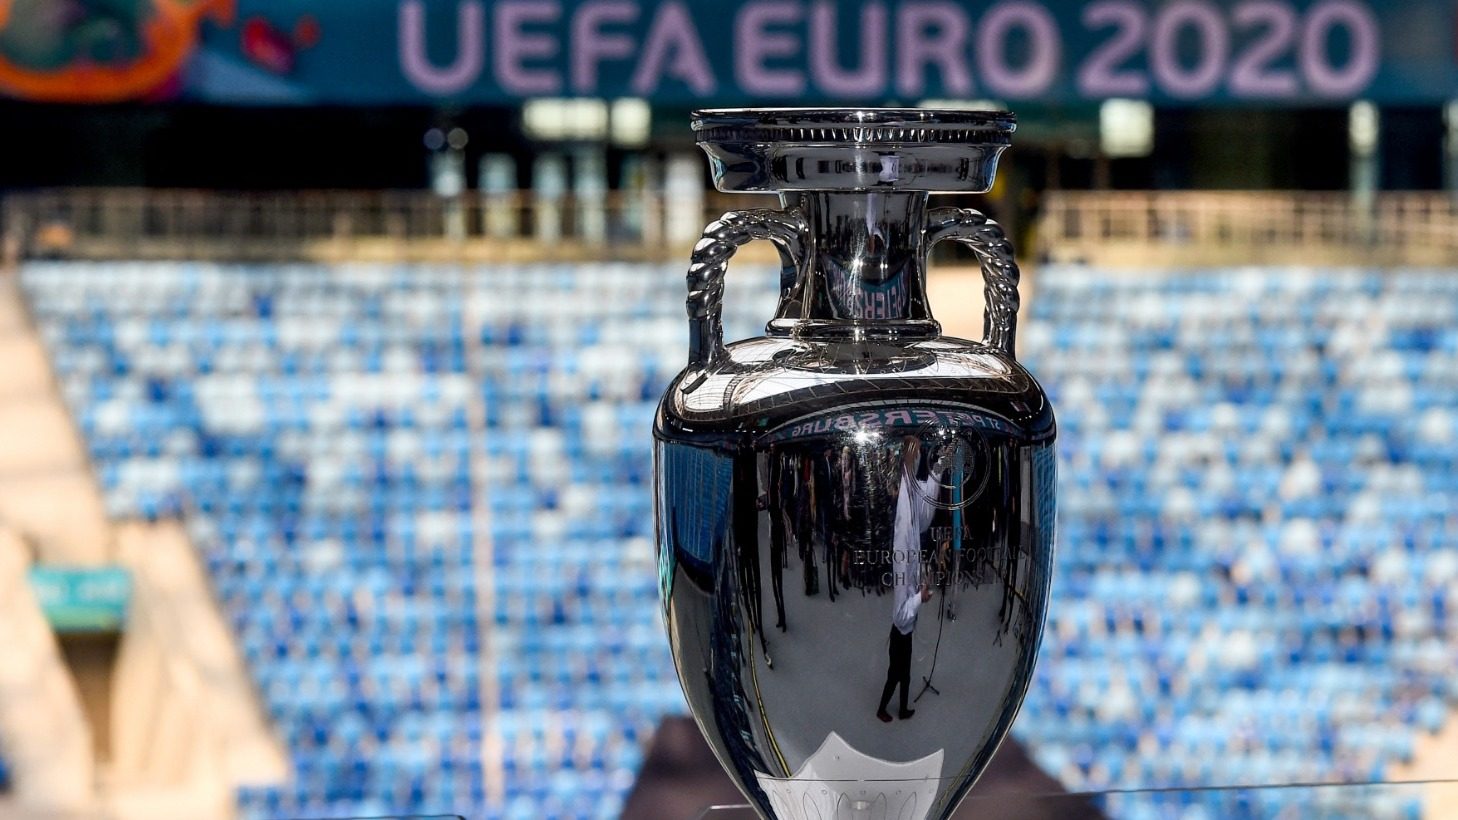 Uefa euro fixtures